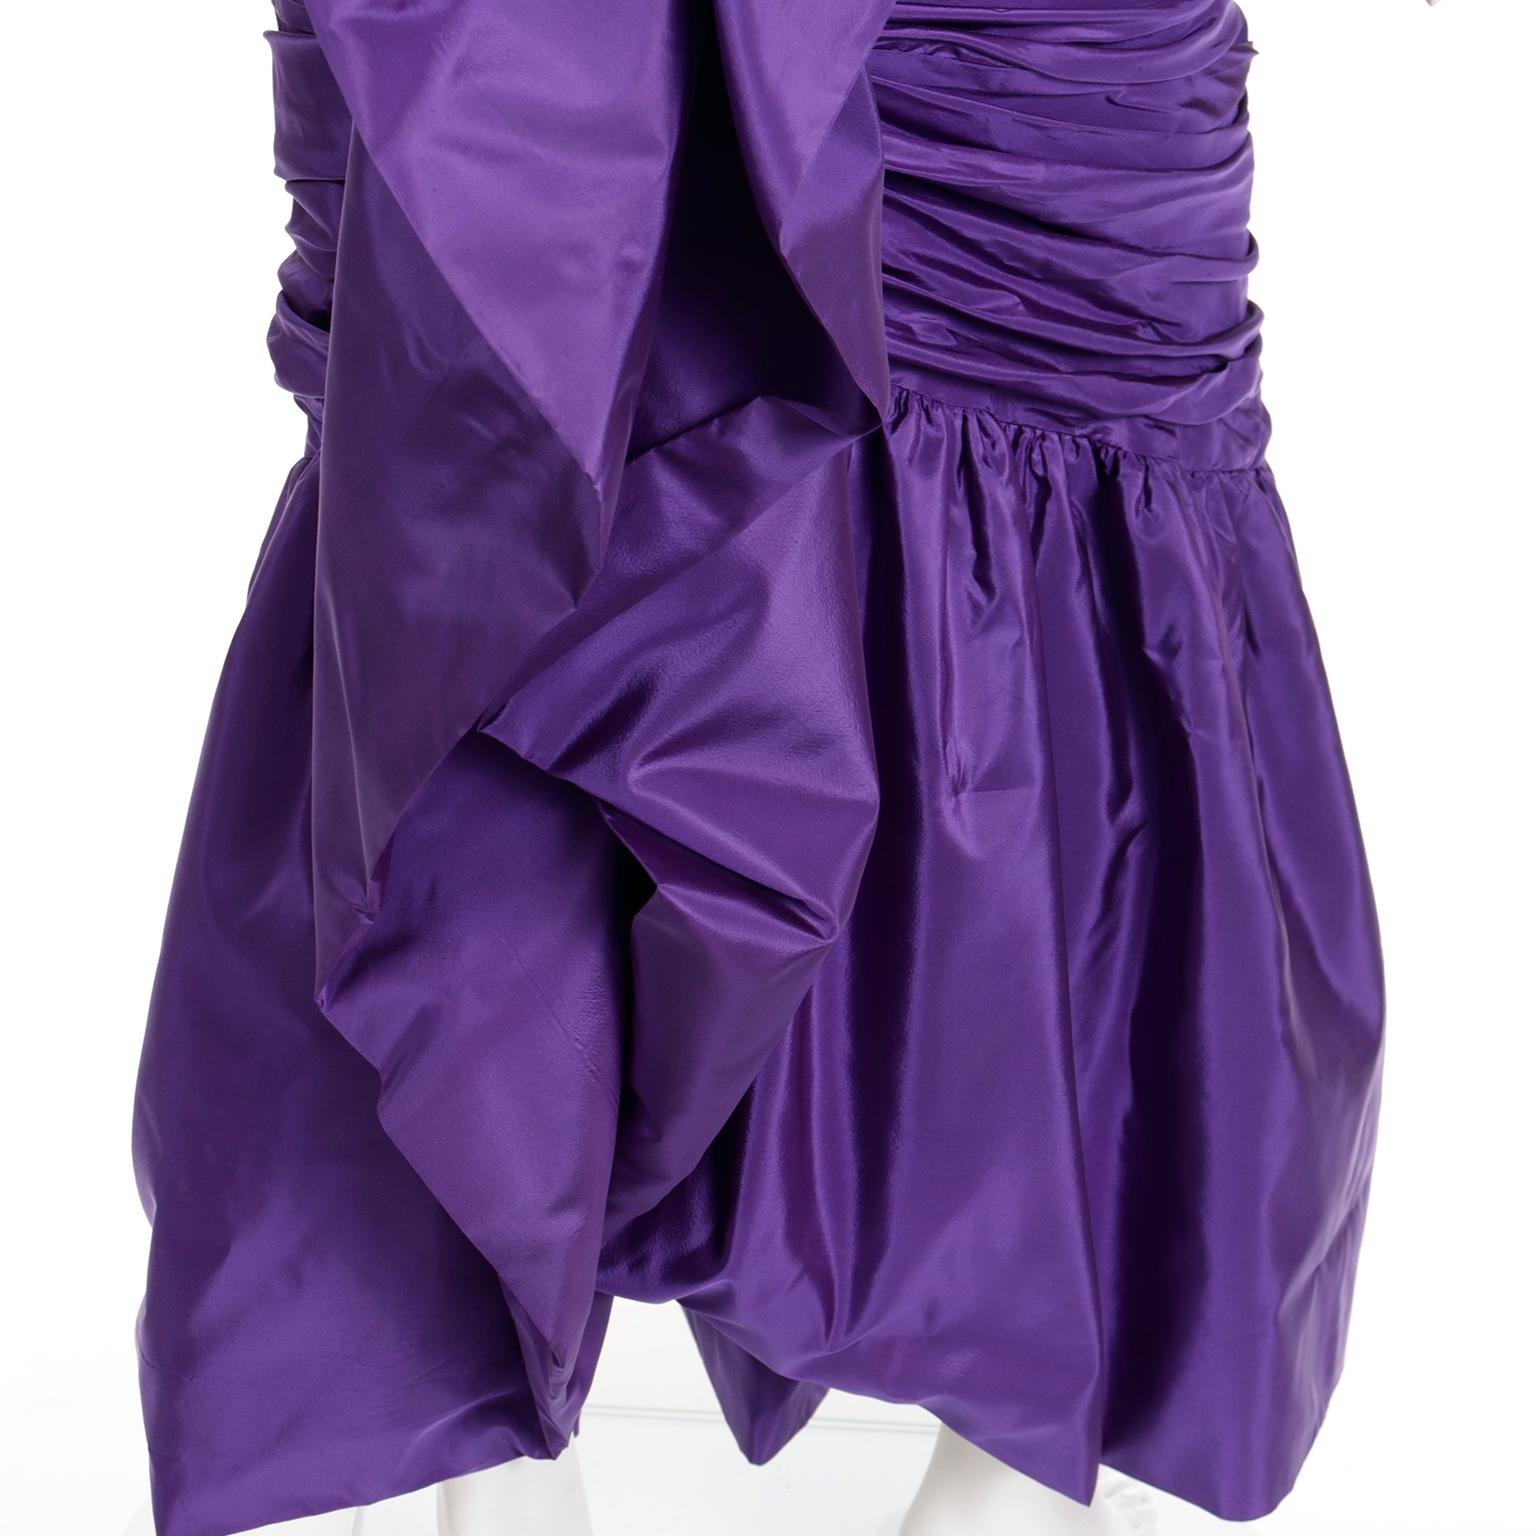 Isabelle Allard 1980s Vintage Dress Ruched Purple Evening Gown For Sale 8